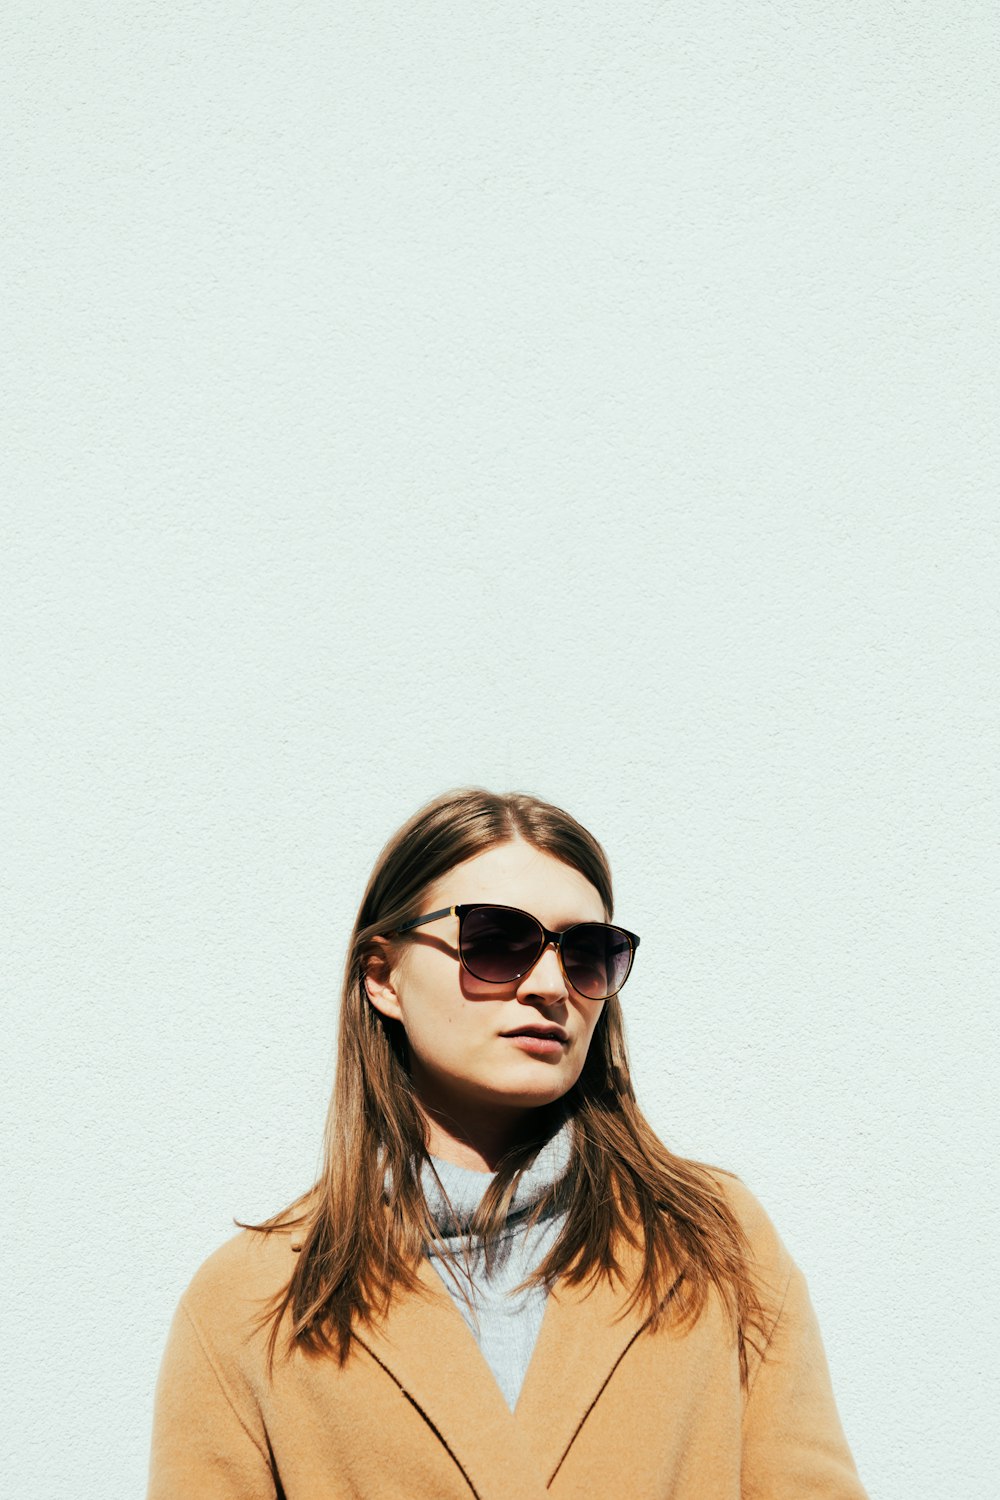 a woman wearing a tan coat and sunglasses